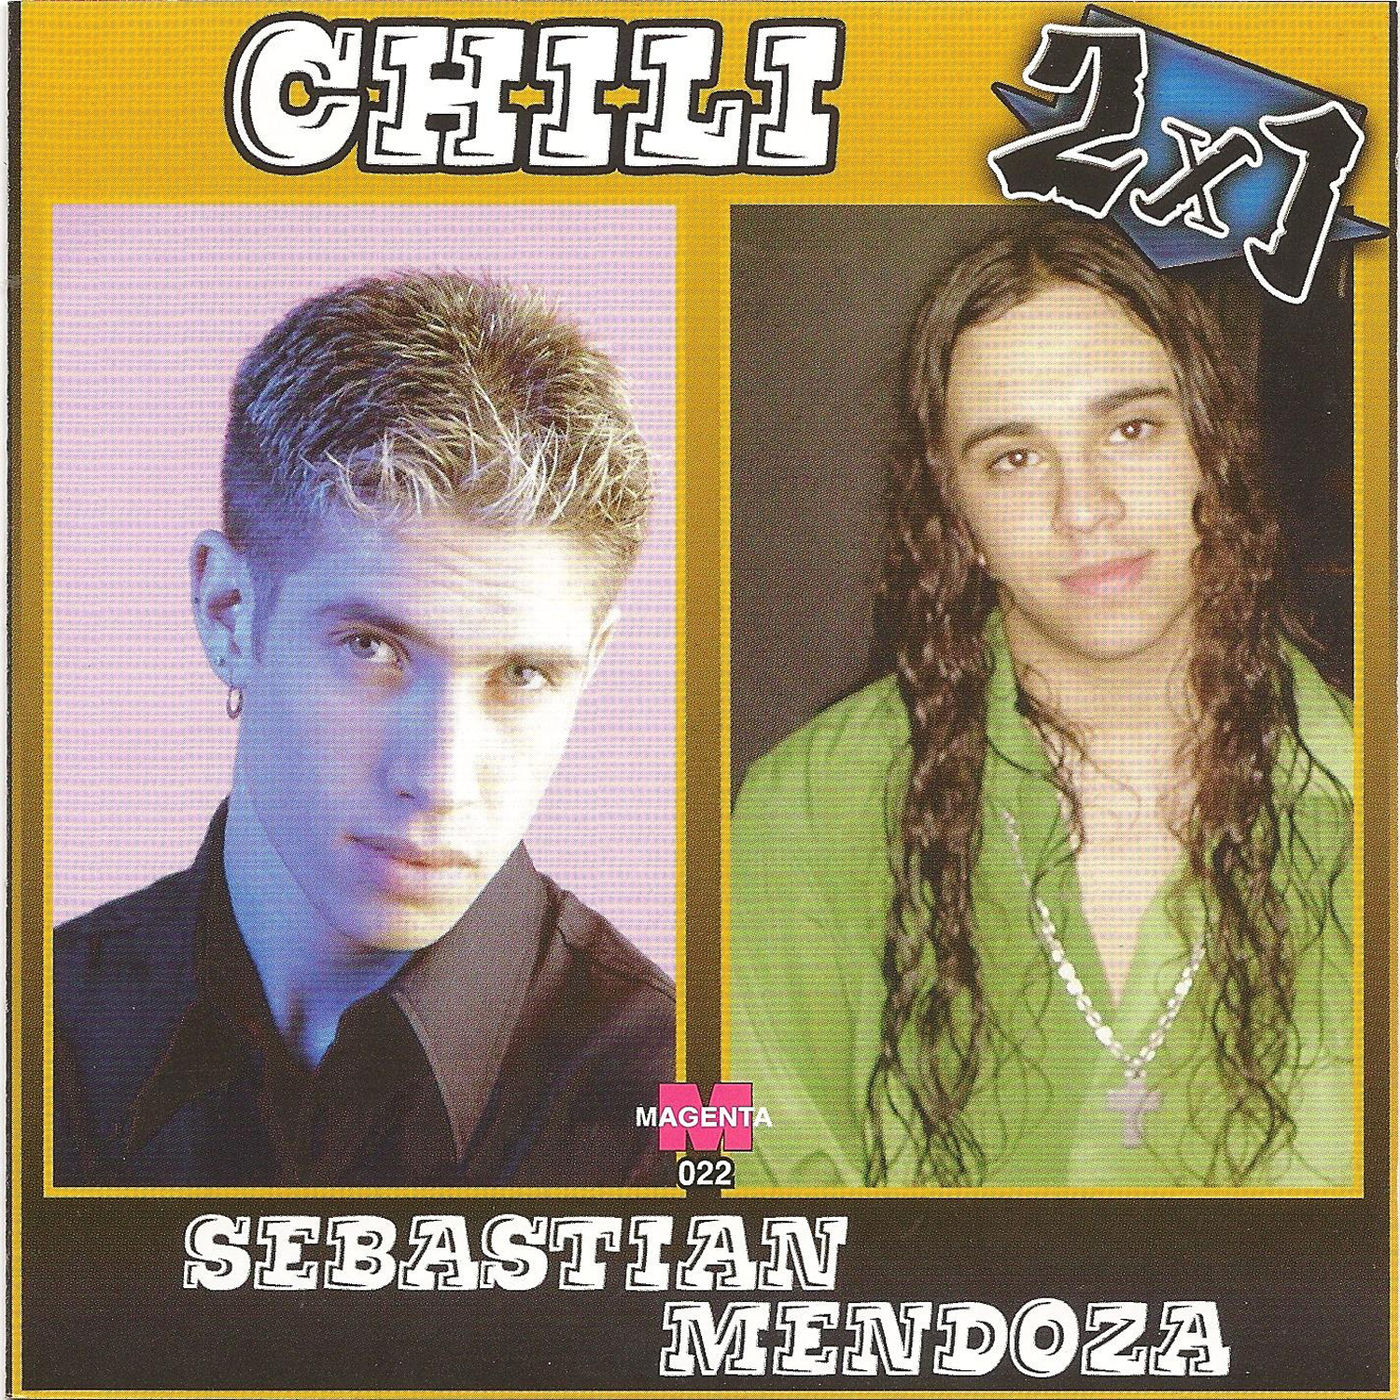 2x1 - CHILI VS SEBASTIAN MENDOZA (2006) FRONTAL